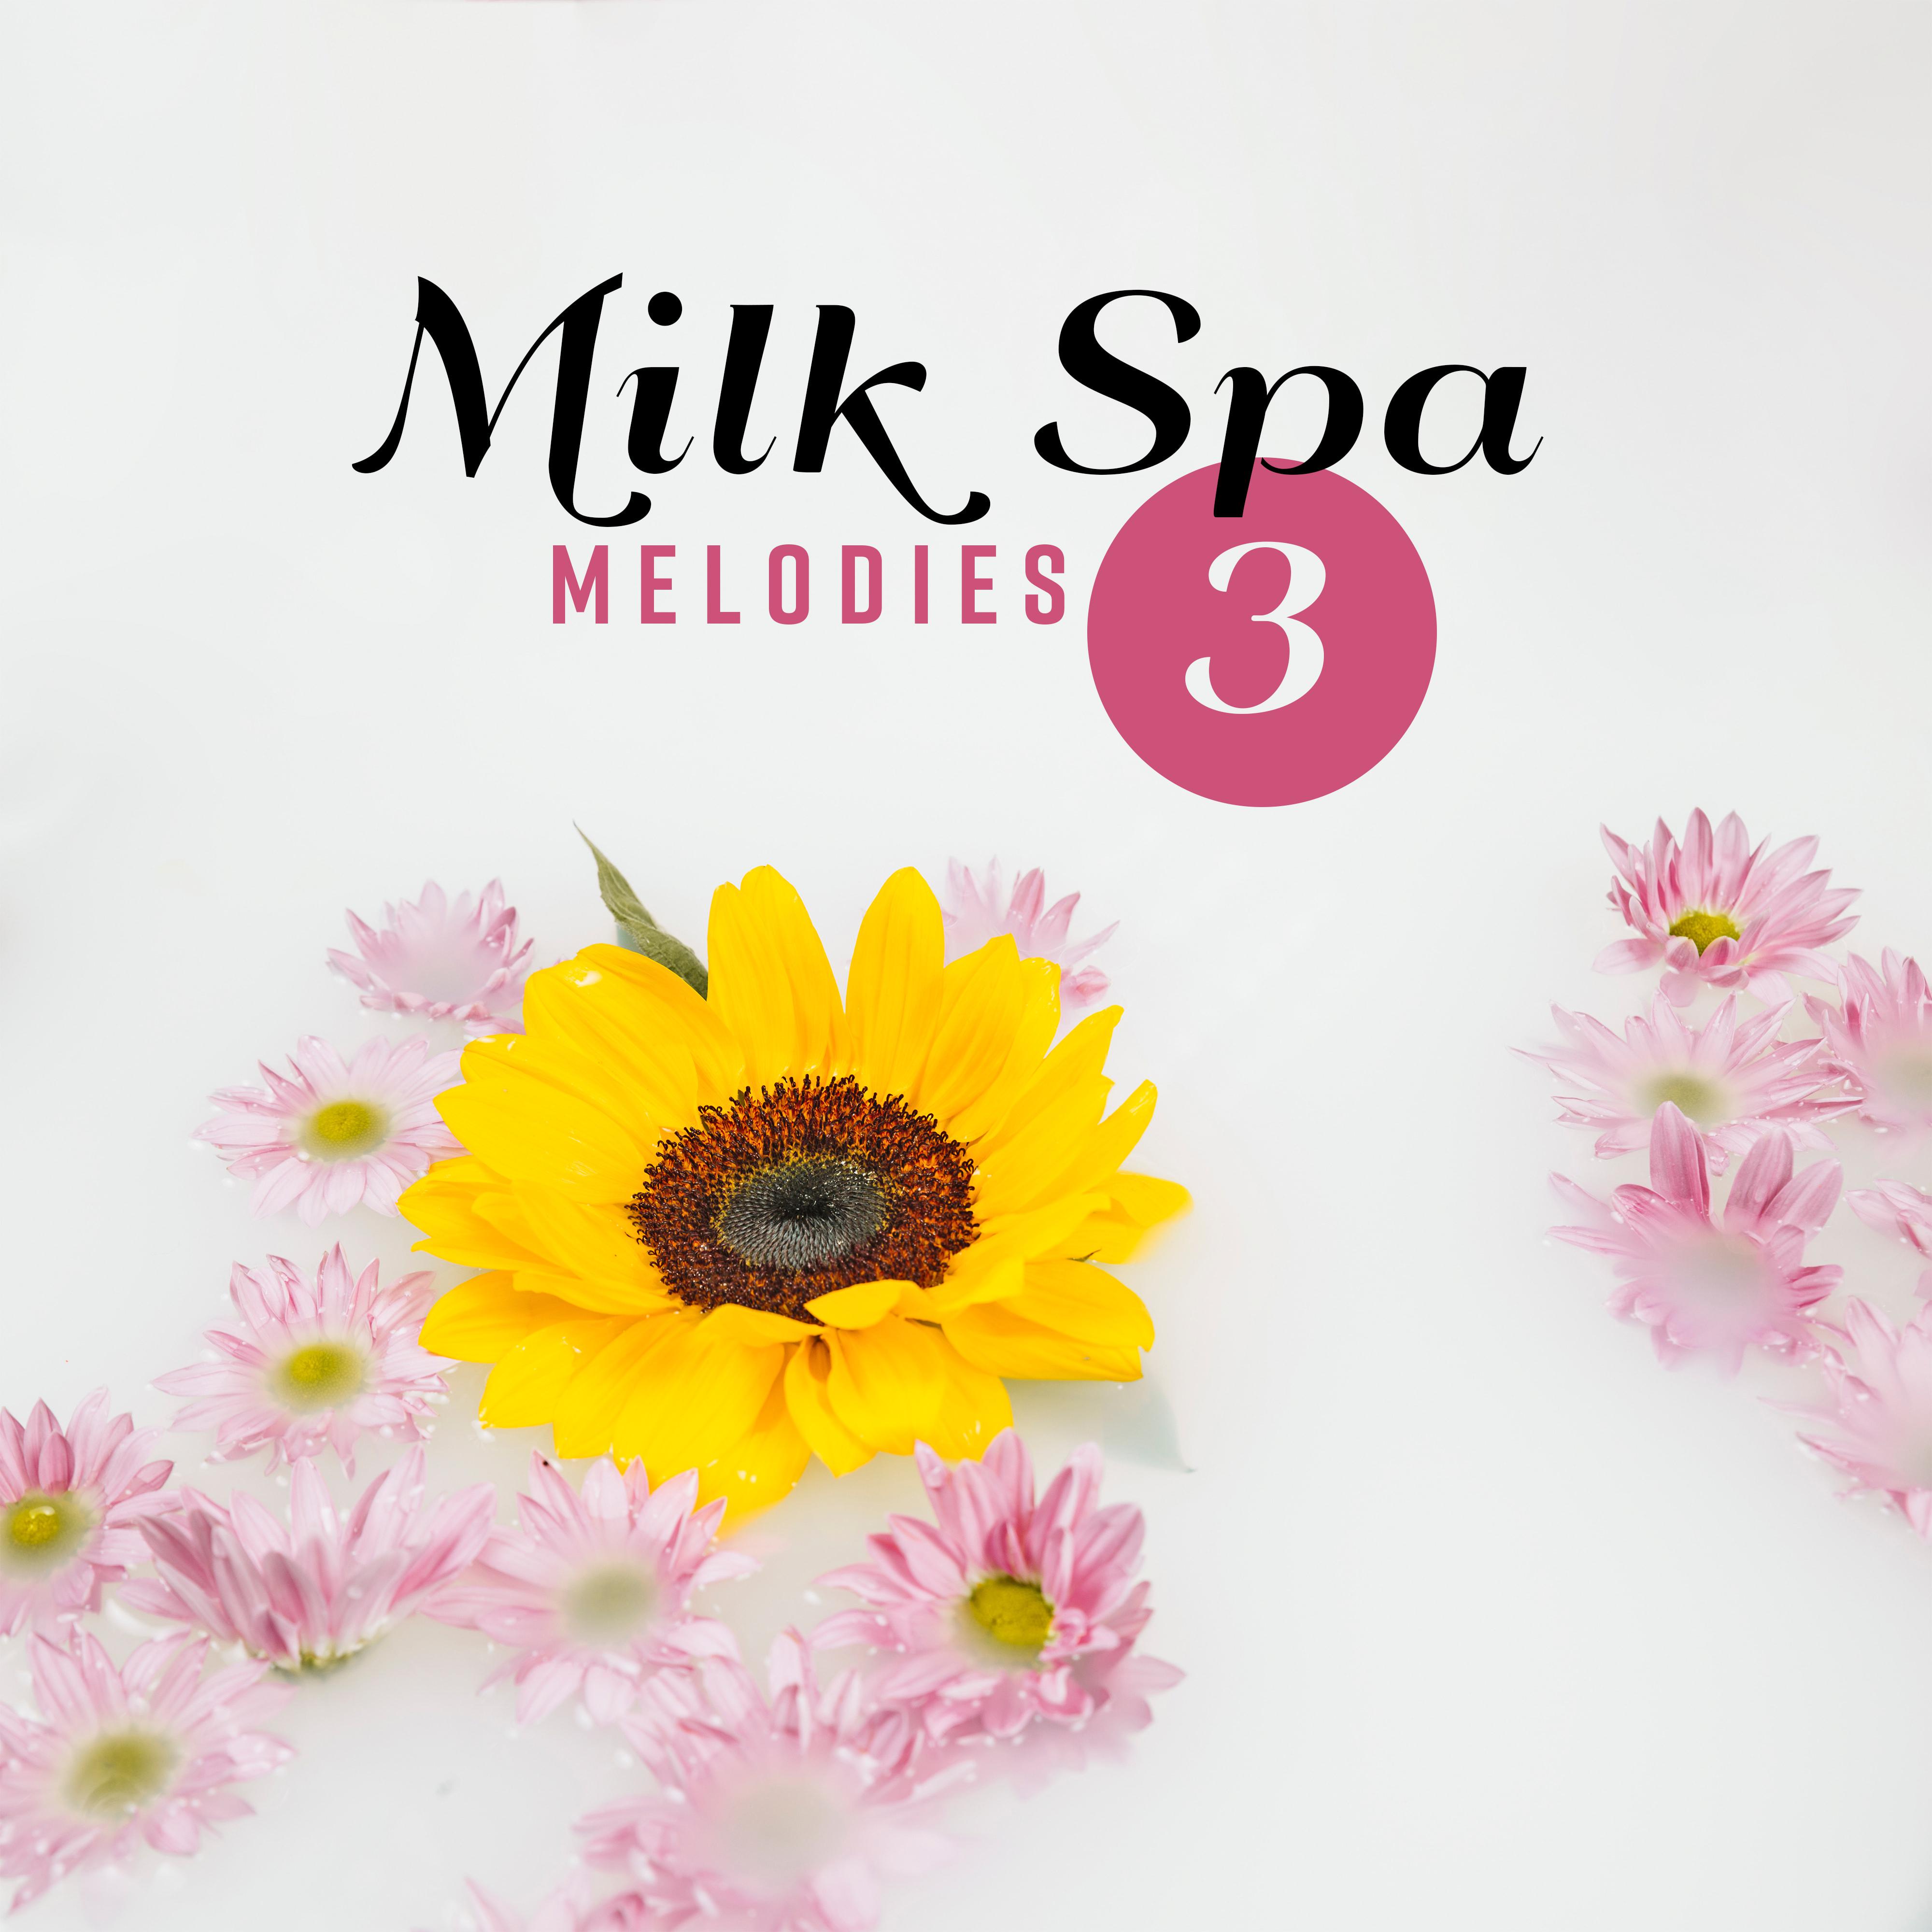 Milk Spa Melodies 3